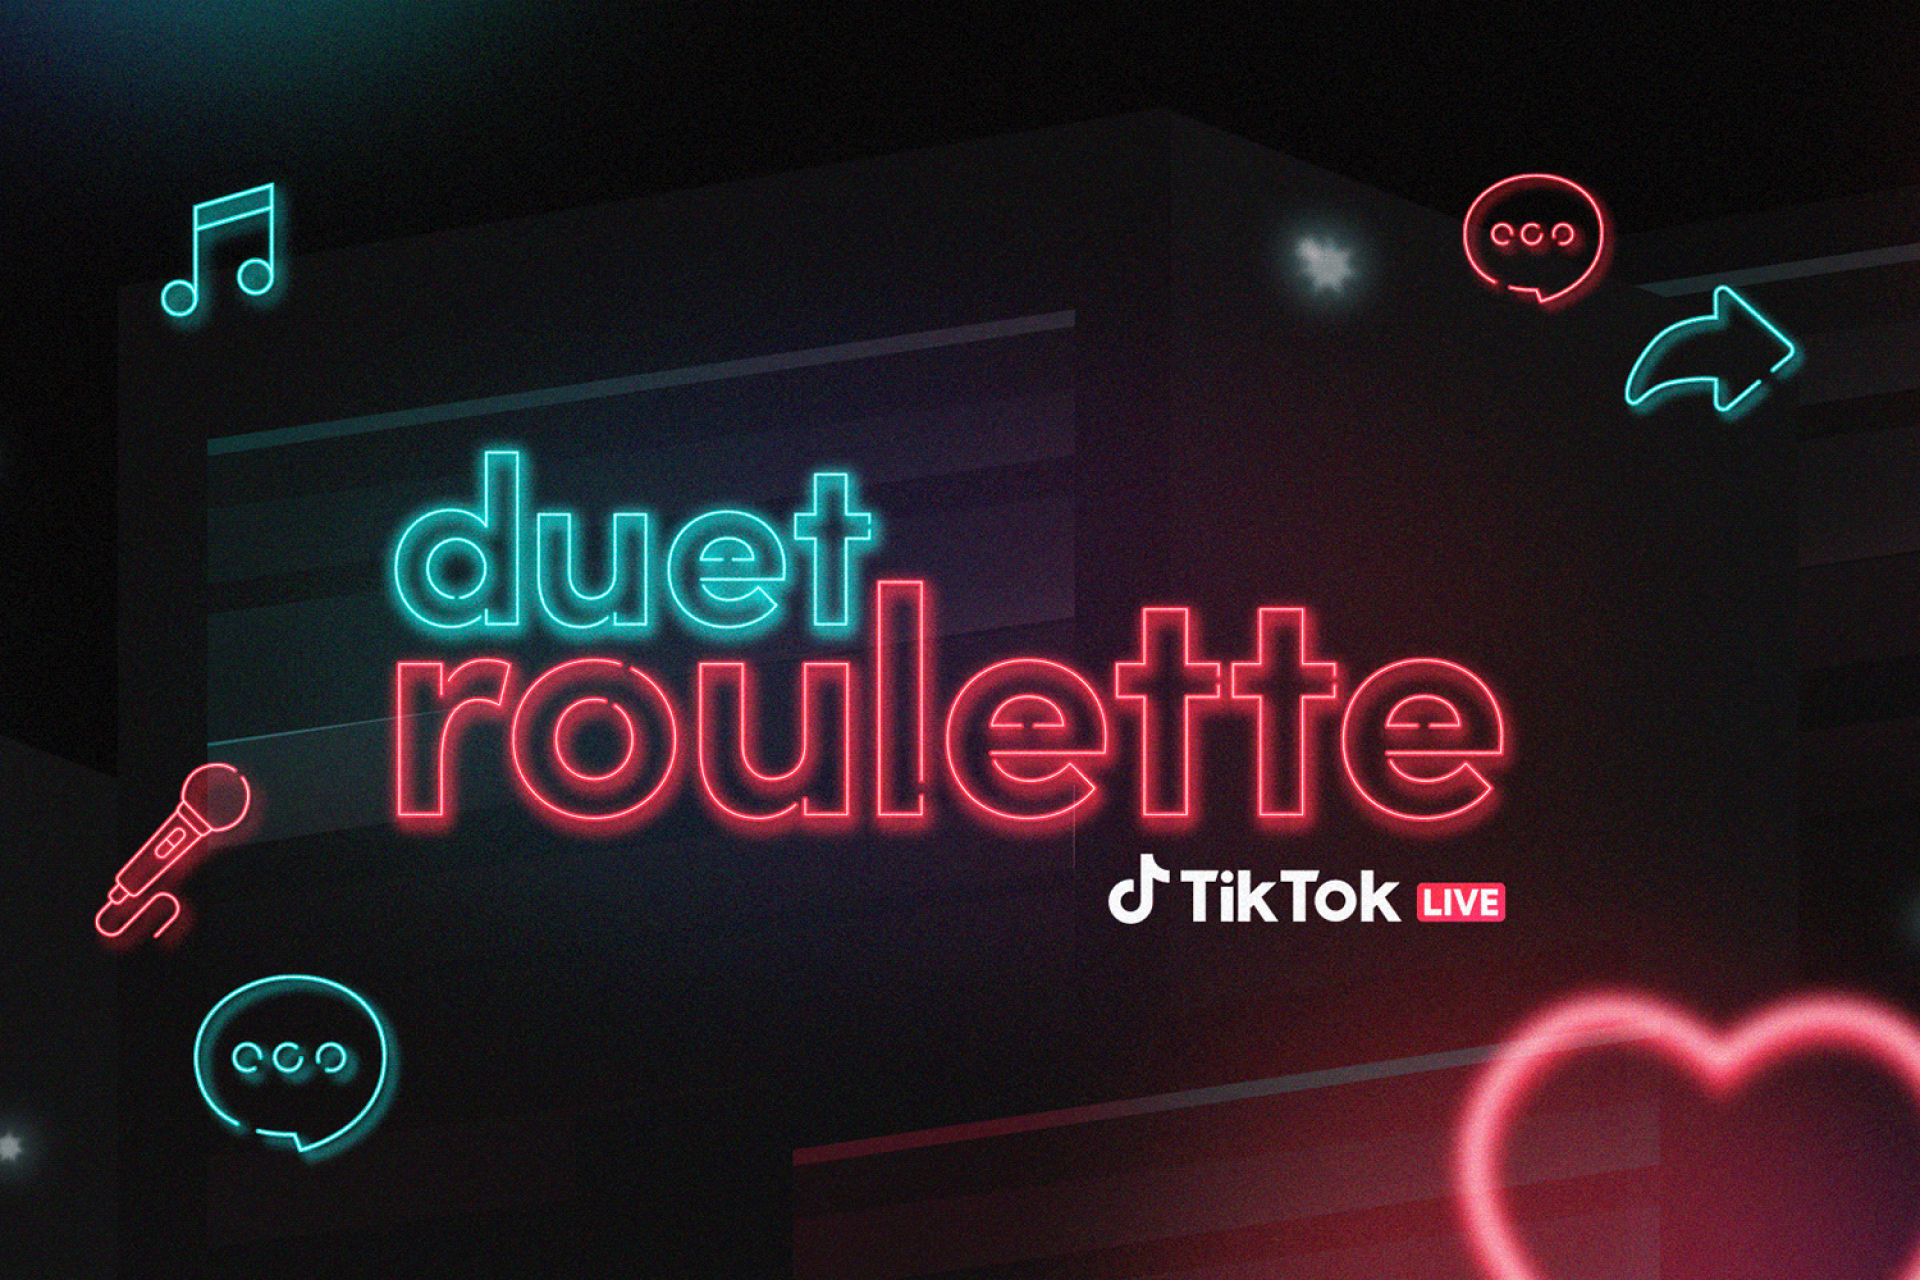 TikTok: Duet Roulette